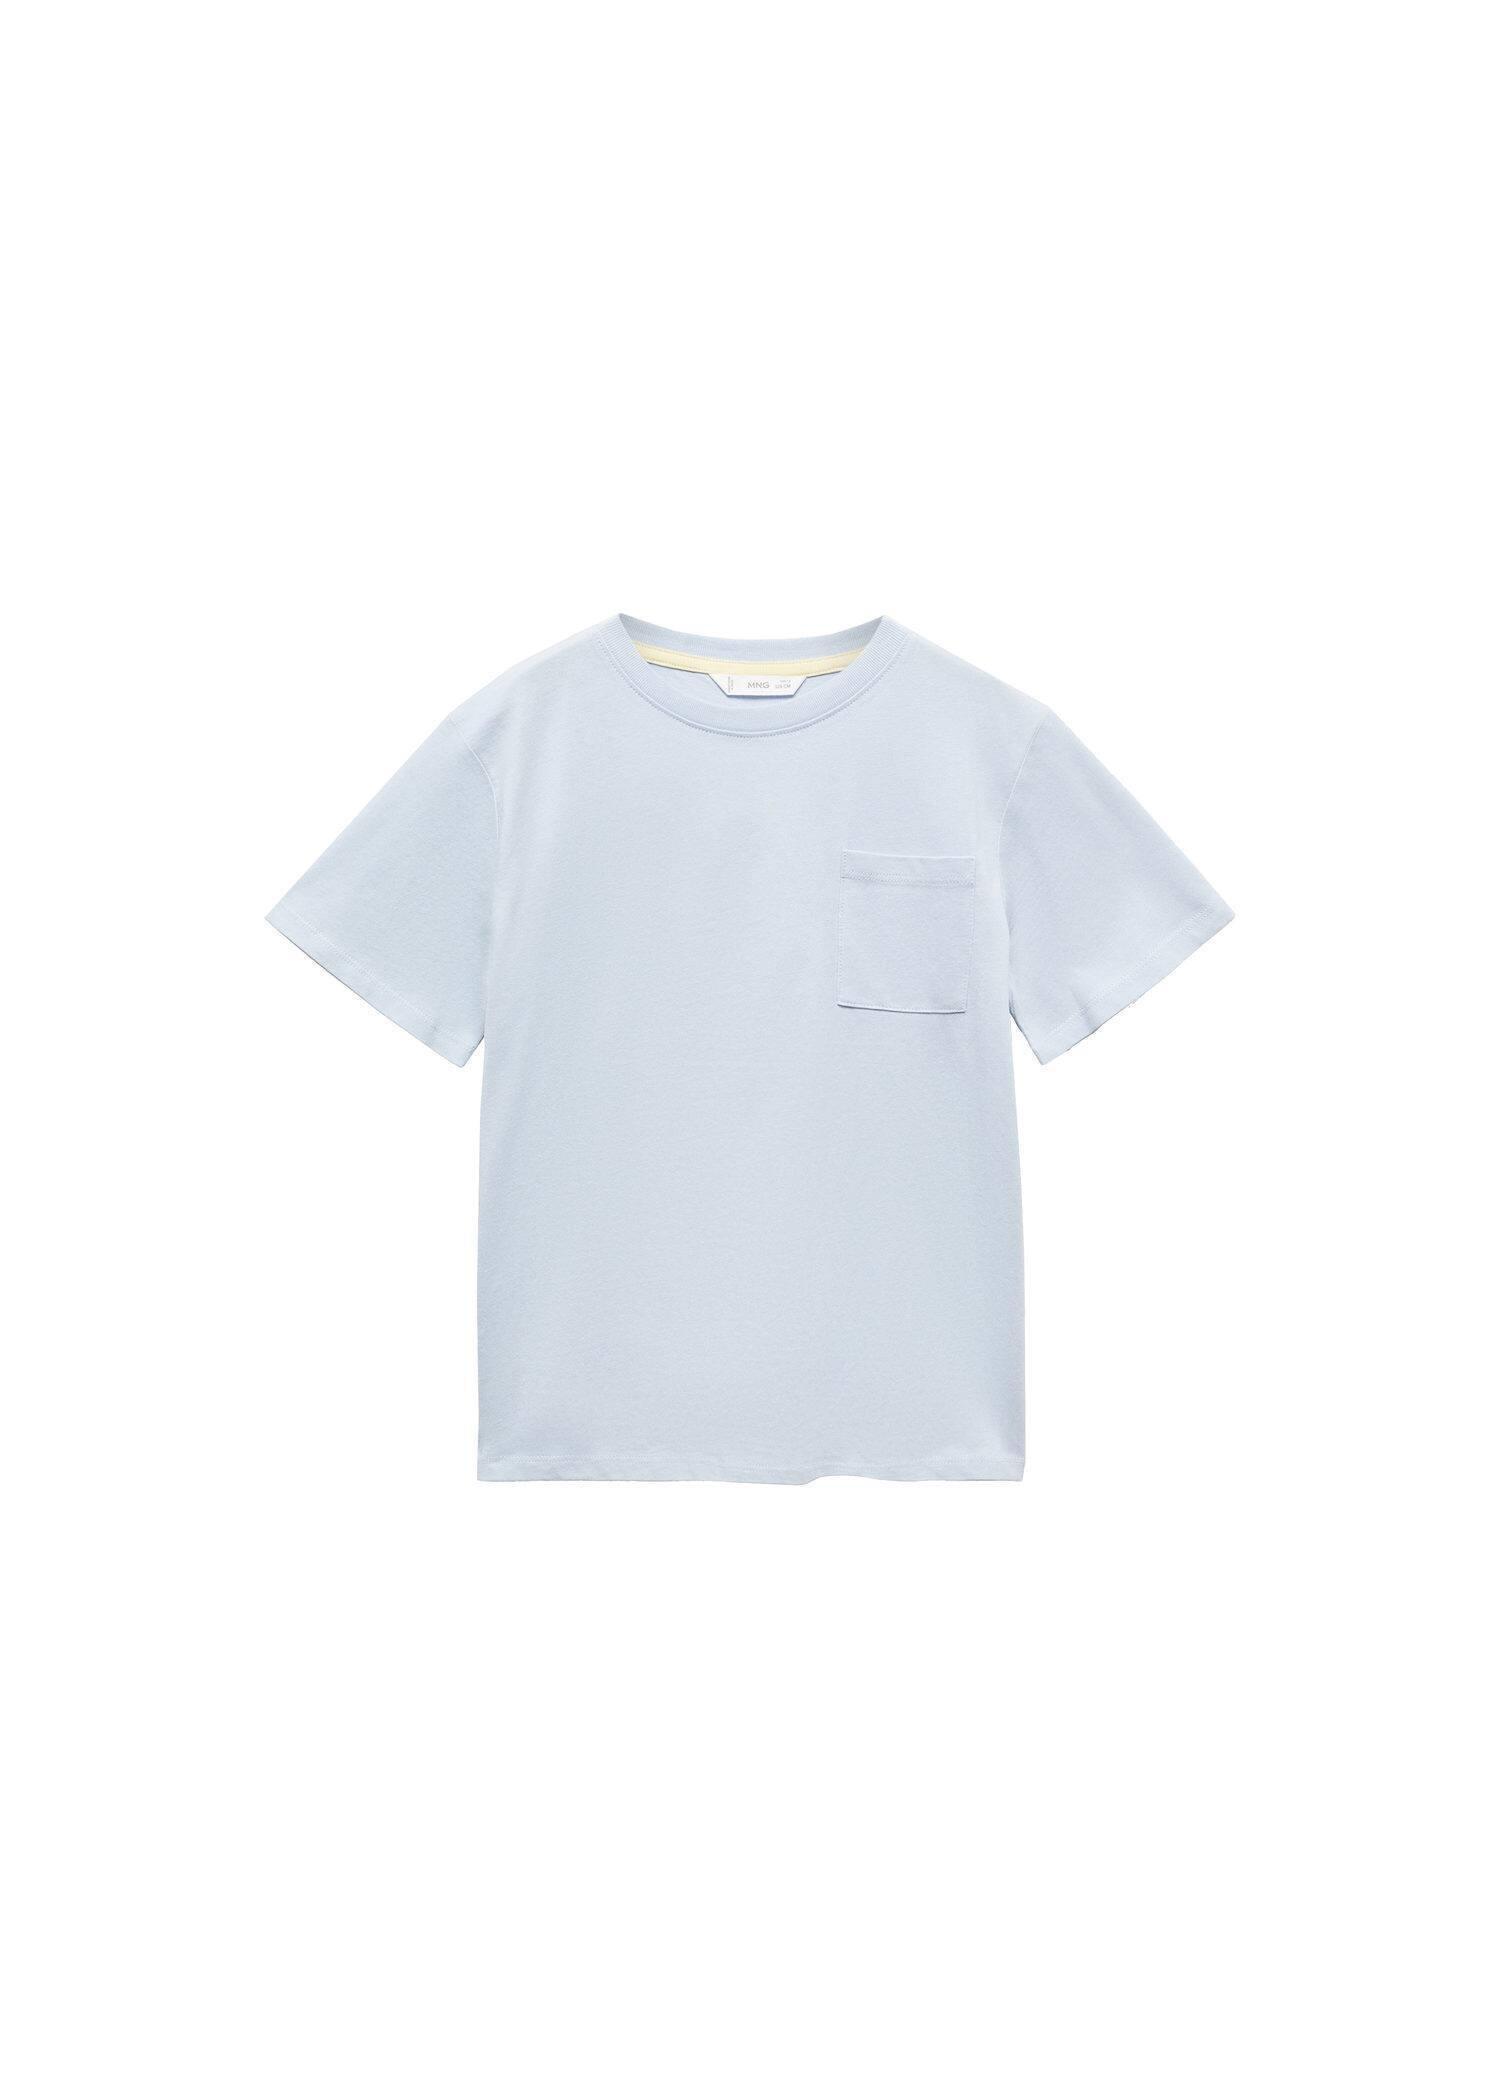 Mango - Blue Essential Cotton-Blend T-Shirt, Kids Boys